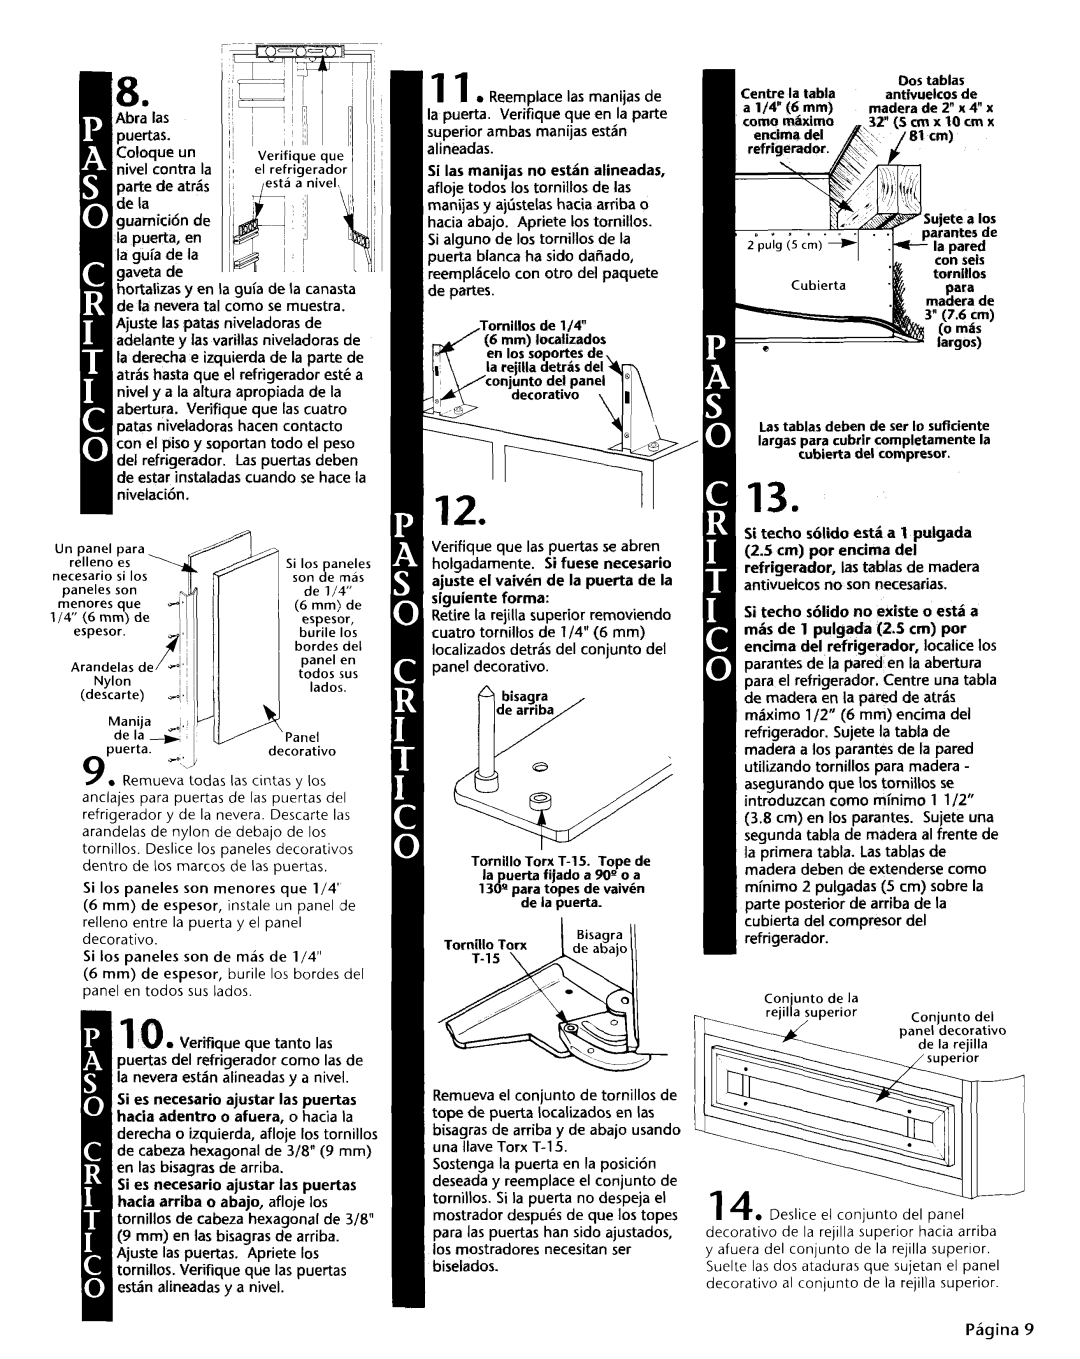 KitchenAid 2004022 installation instructions Dos tablas, reji iia superior 